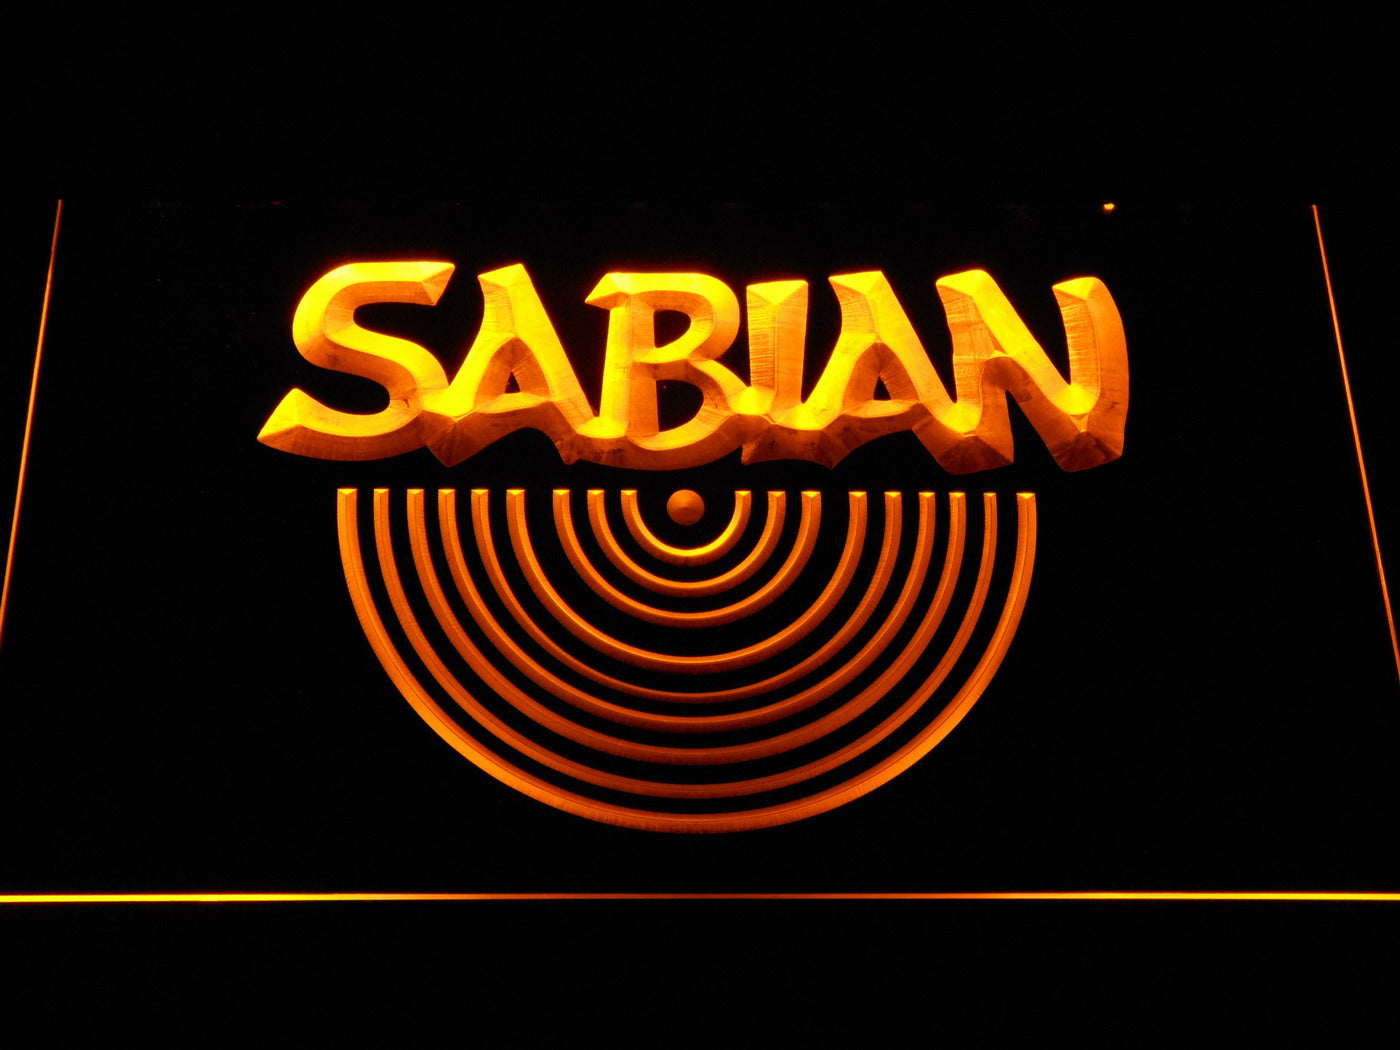 Sabian Band LED Neon Sign